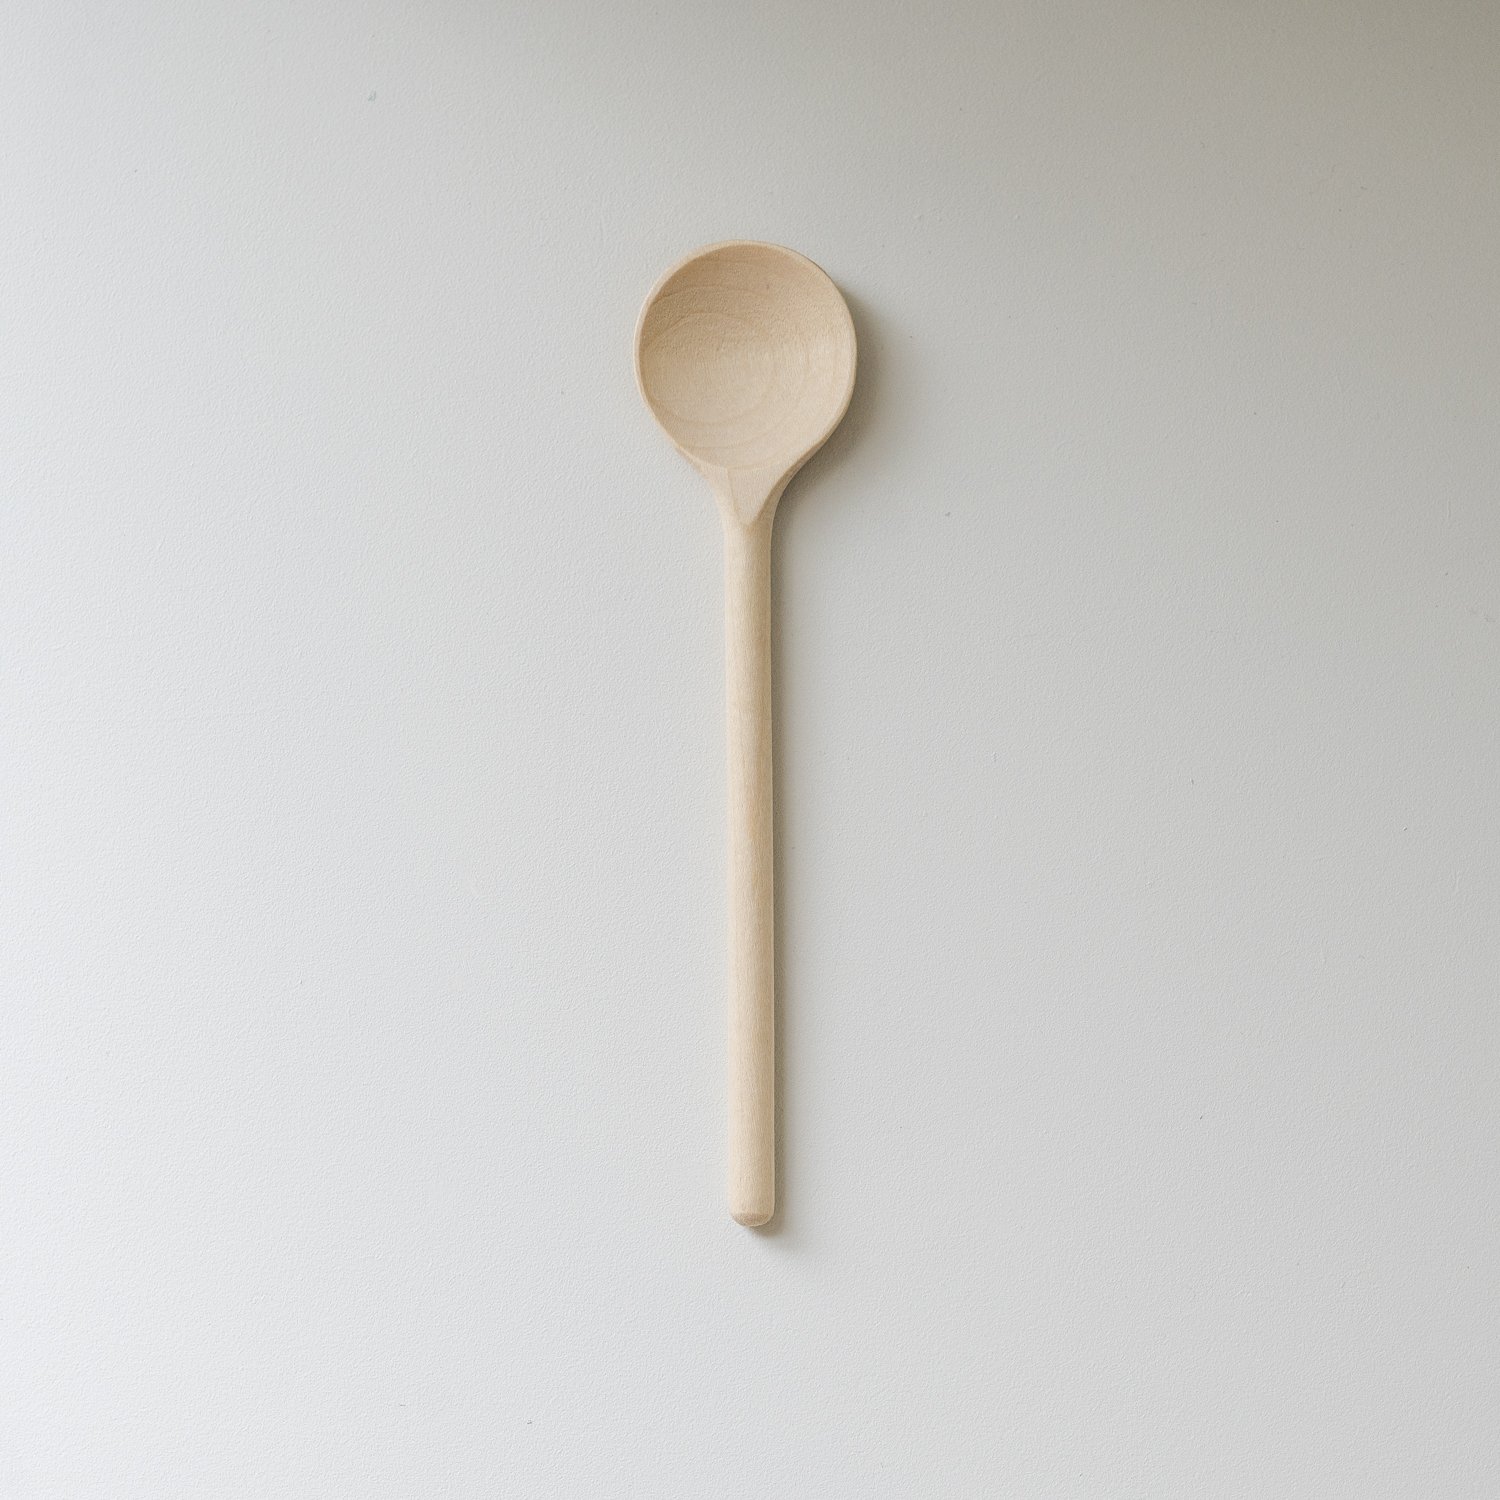 Wooden Spoon 20cm